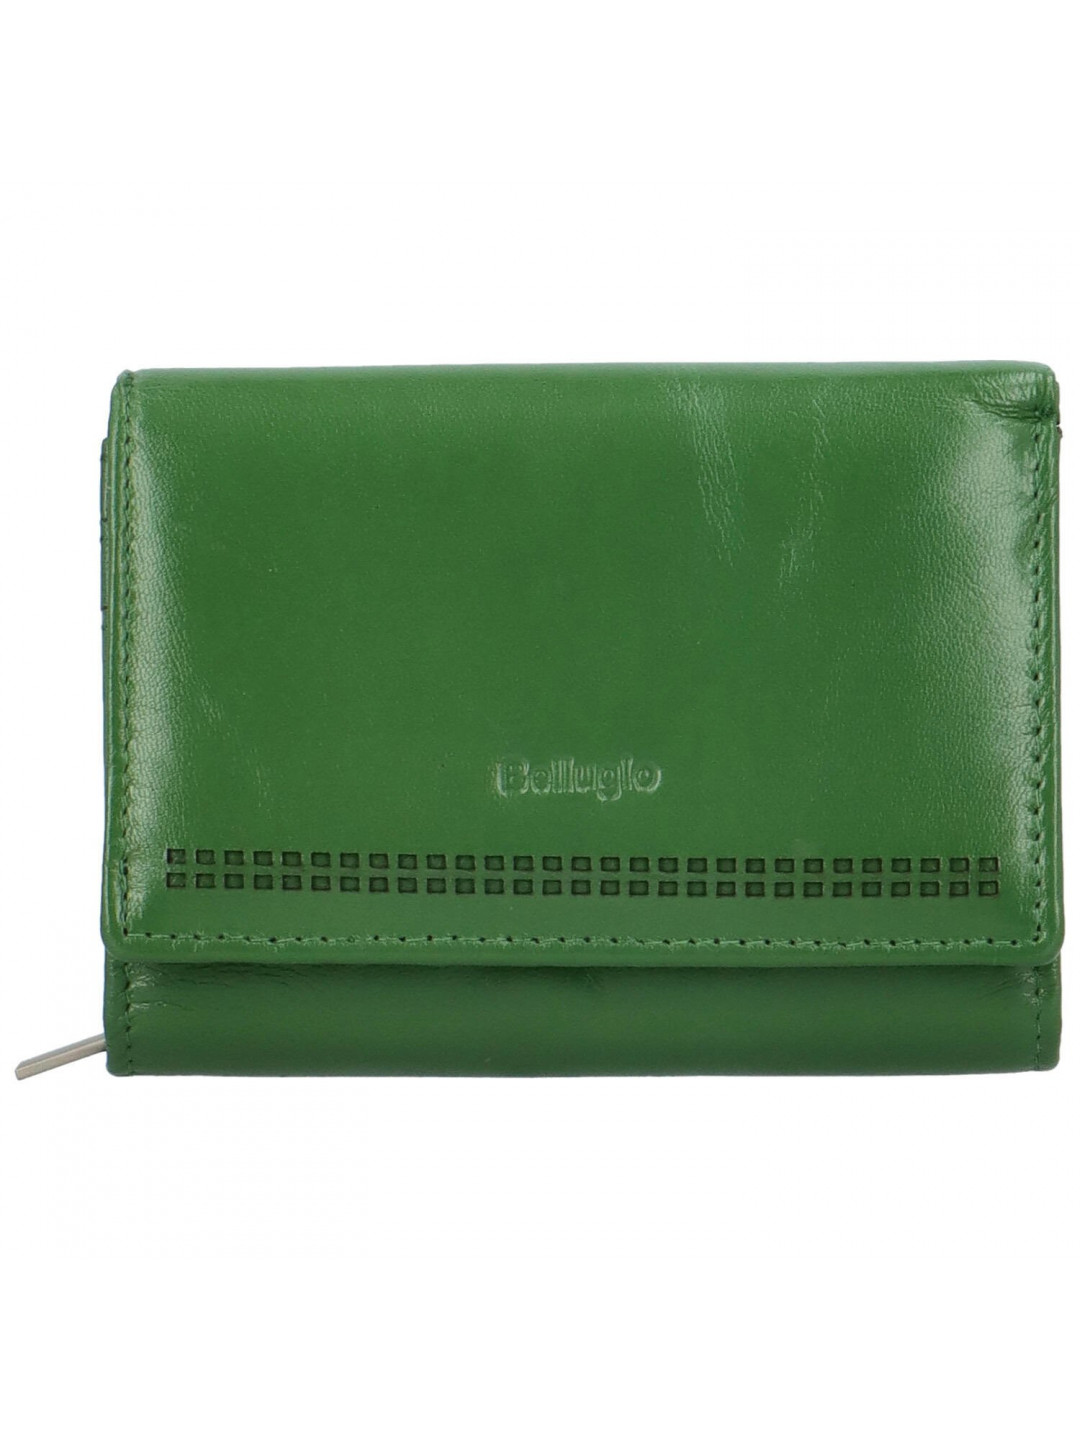 Dámská kožená peněženka zelená – Bellugio Glorgia